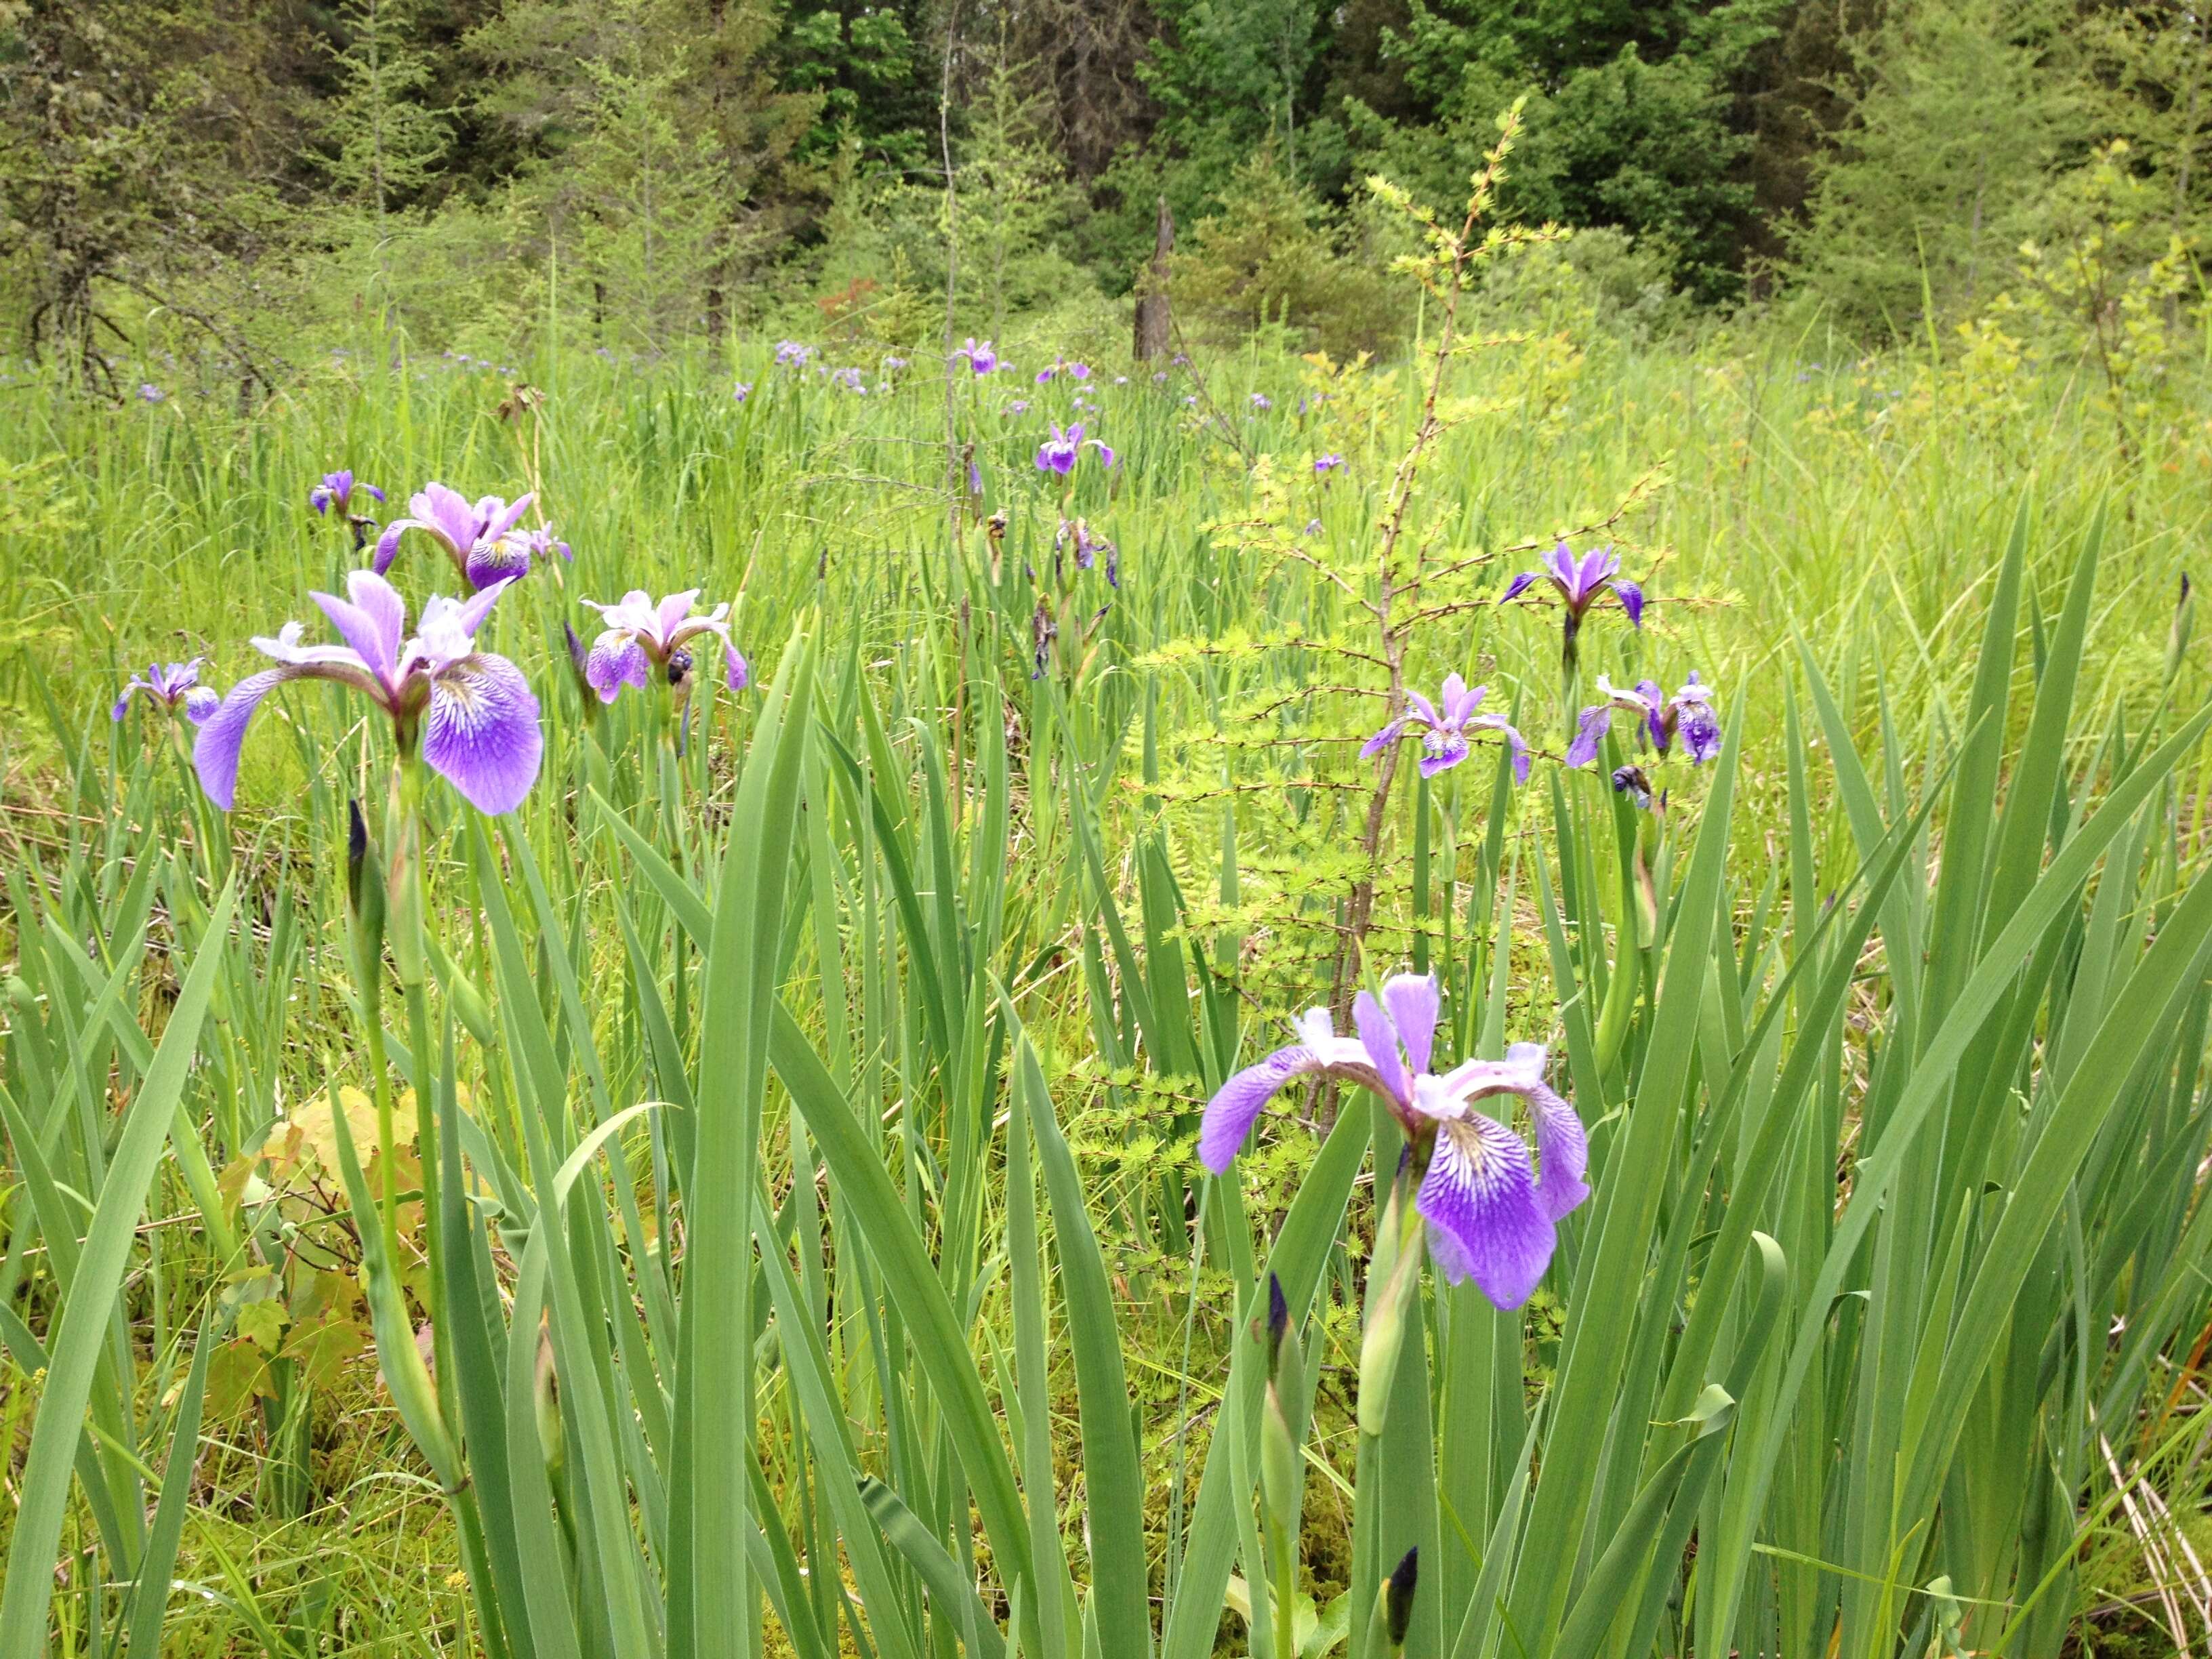 Image de blue flag iris versicolore